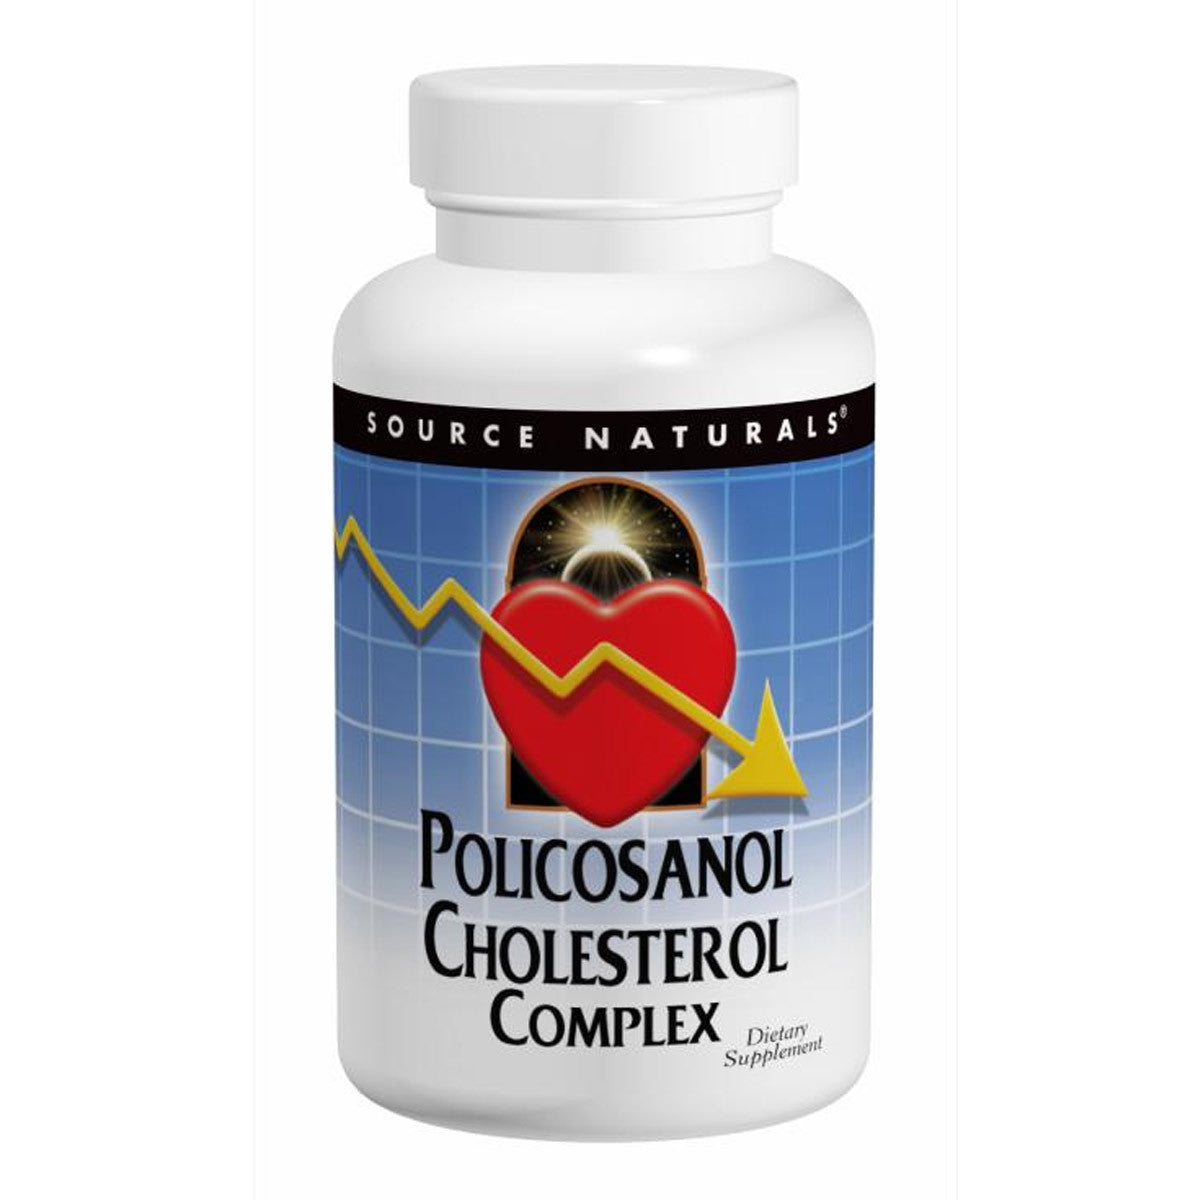 Primary image of Policosanol Cholesterol Complex